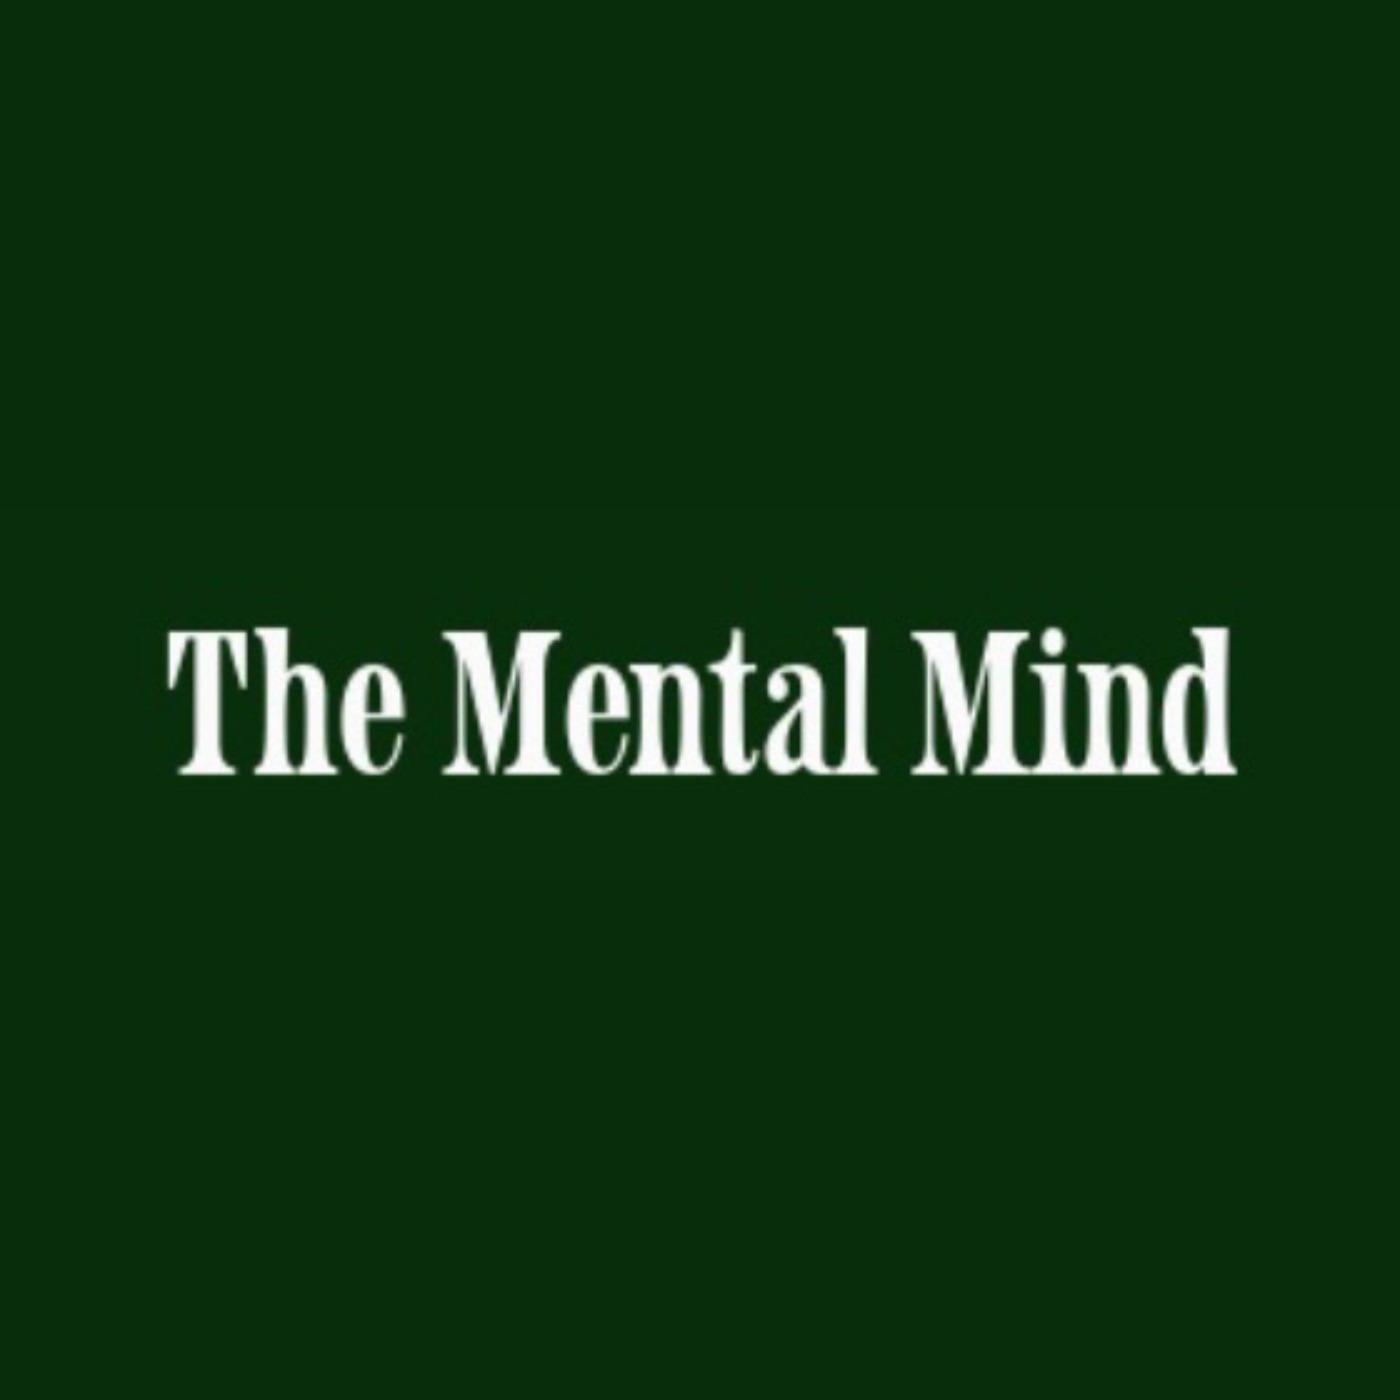 The Mental Mind